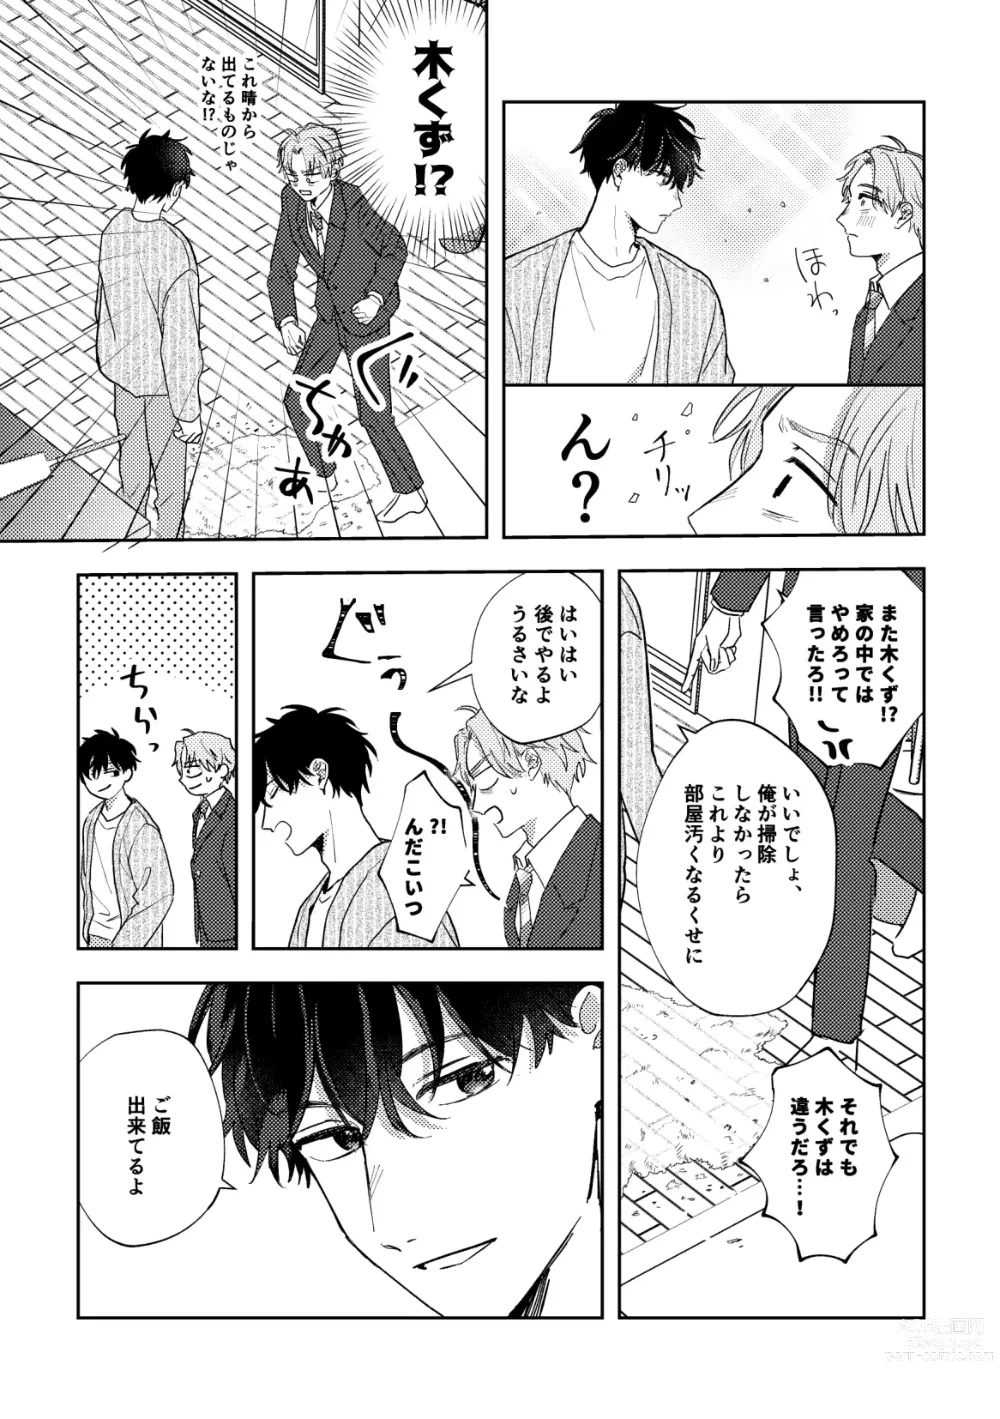 Page 13 of doujinshi Ame ni Hare wo Kau